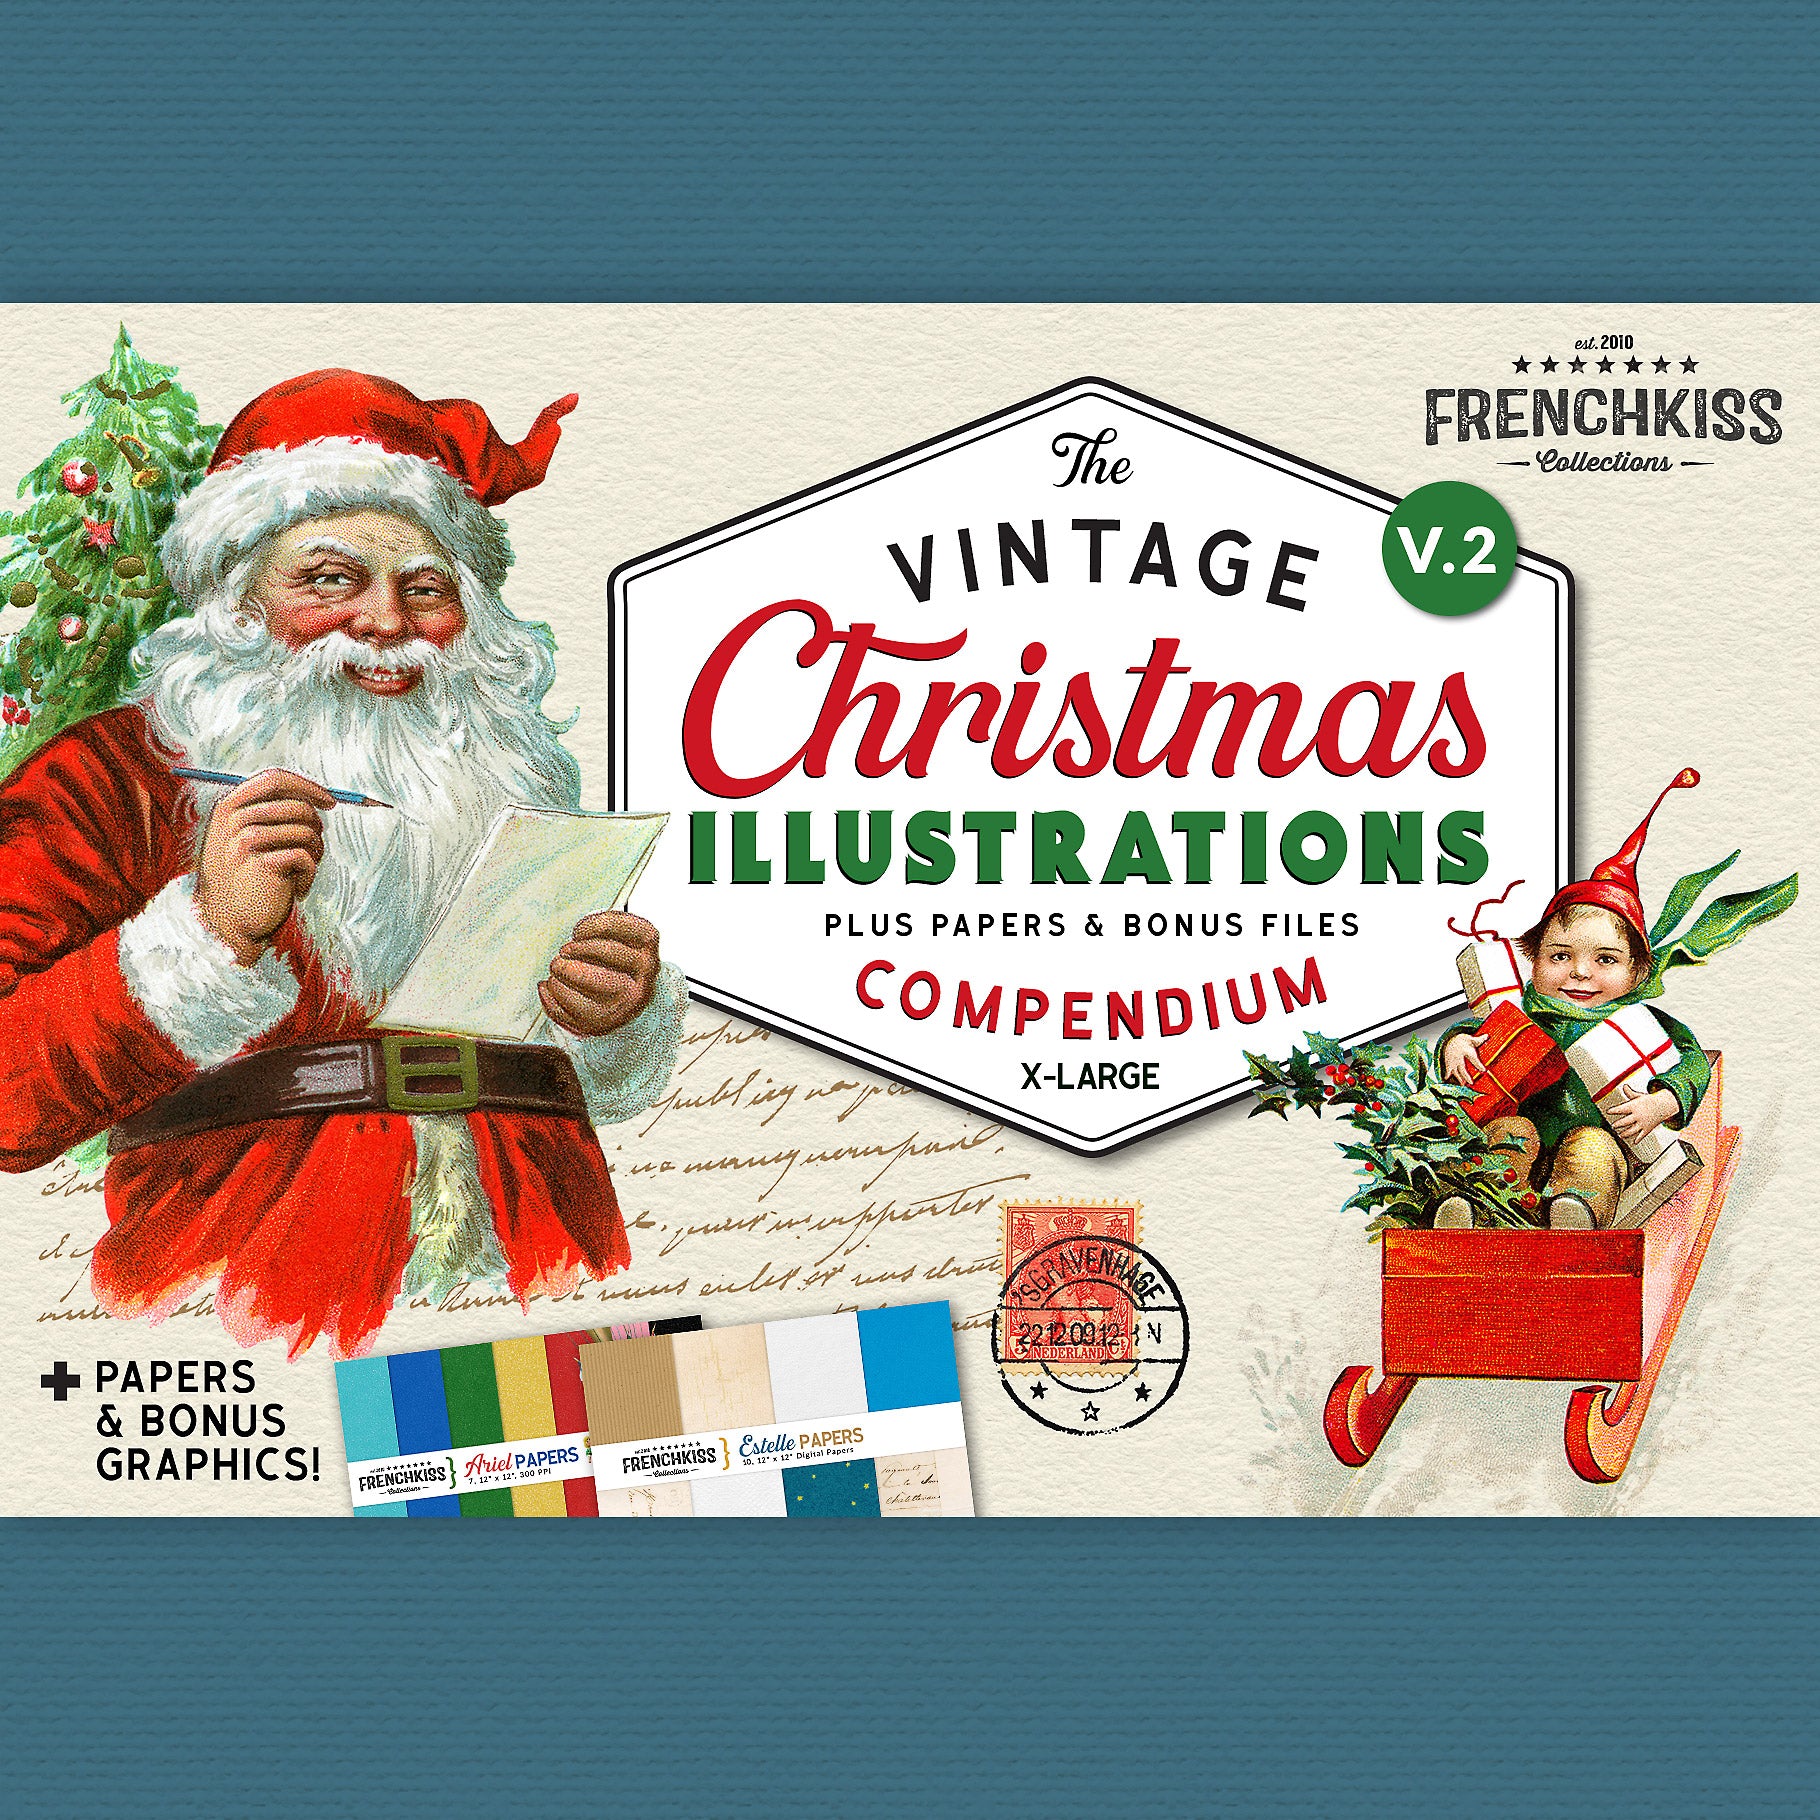 The Vintage Christmas Illustrations Compendium V.2 digital graphics.